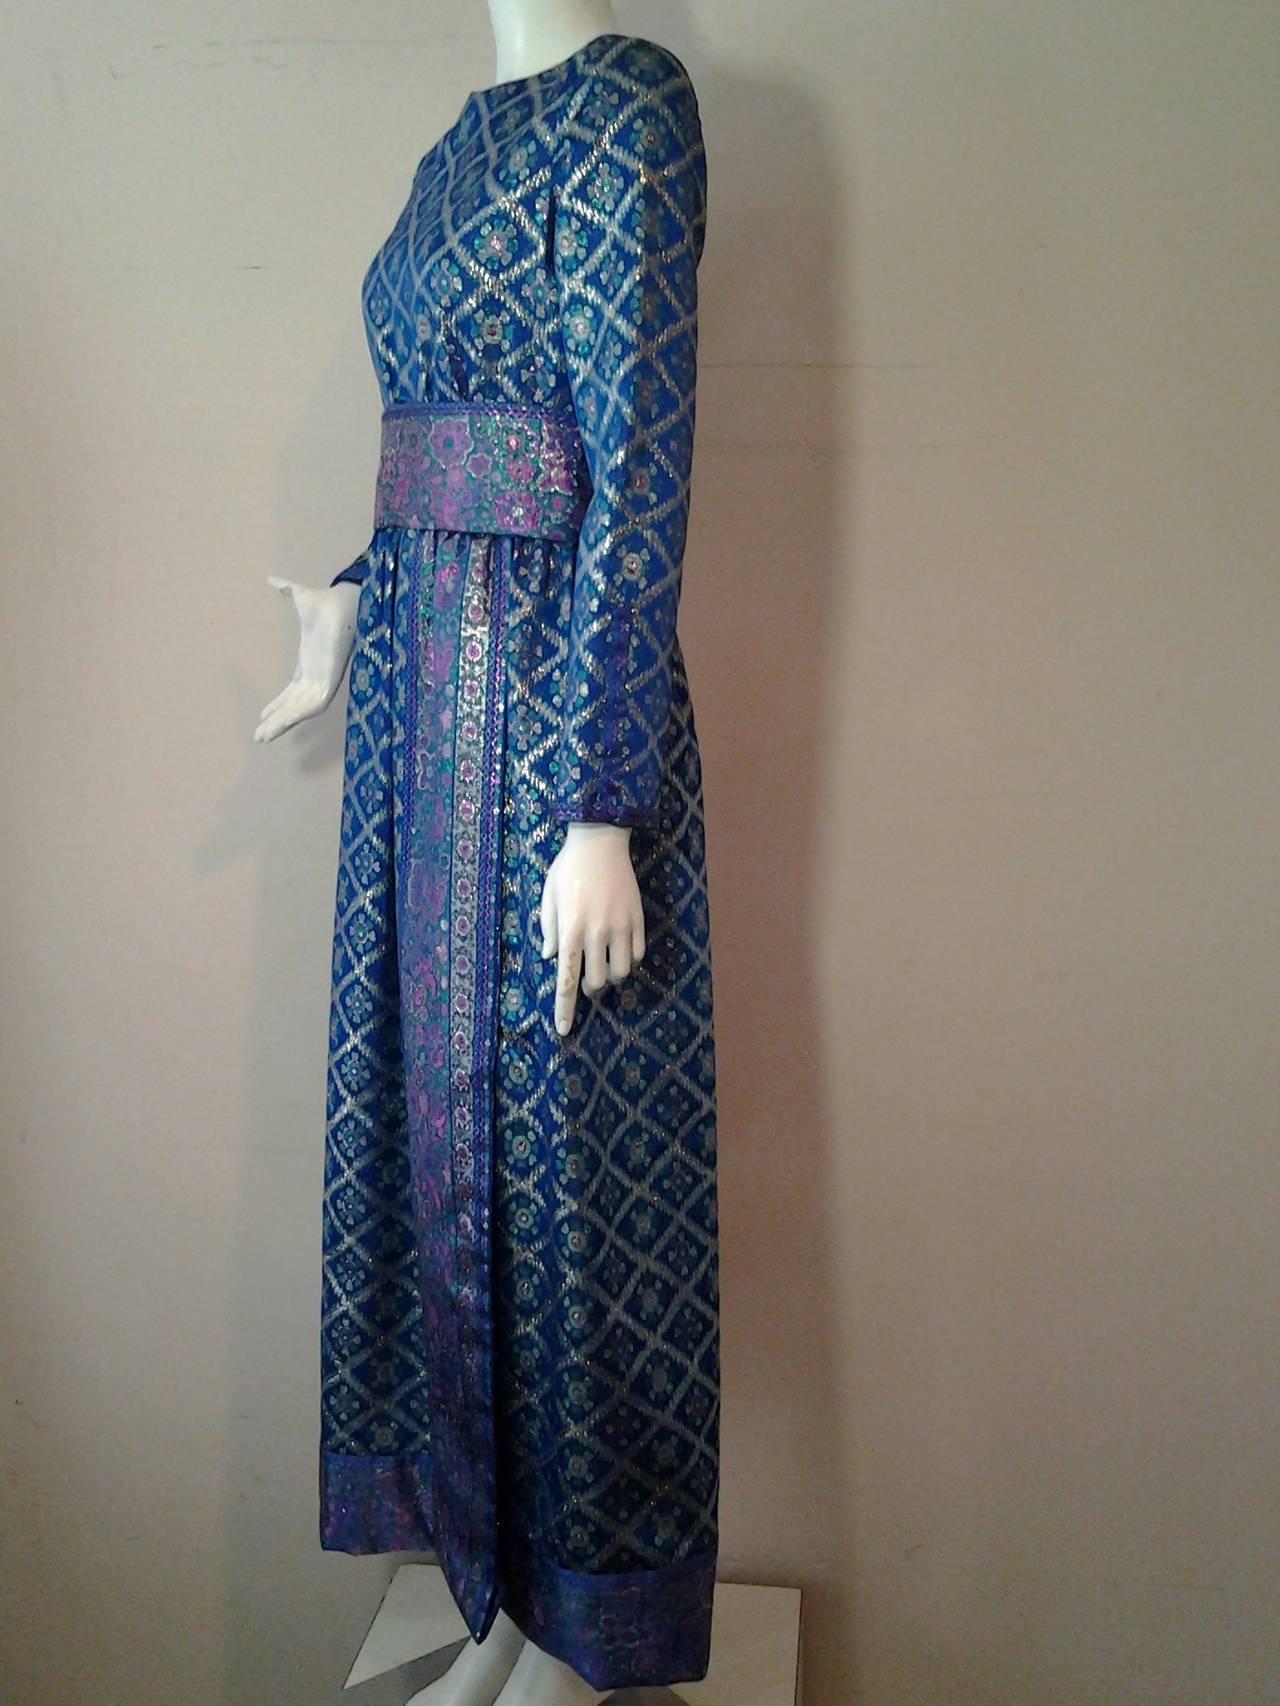 1960s Oscar de la Renta Metallic Brocade Gown w/ Obi-Inspired Sash at ...